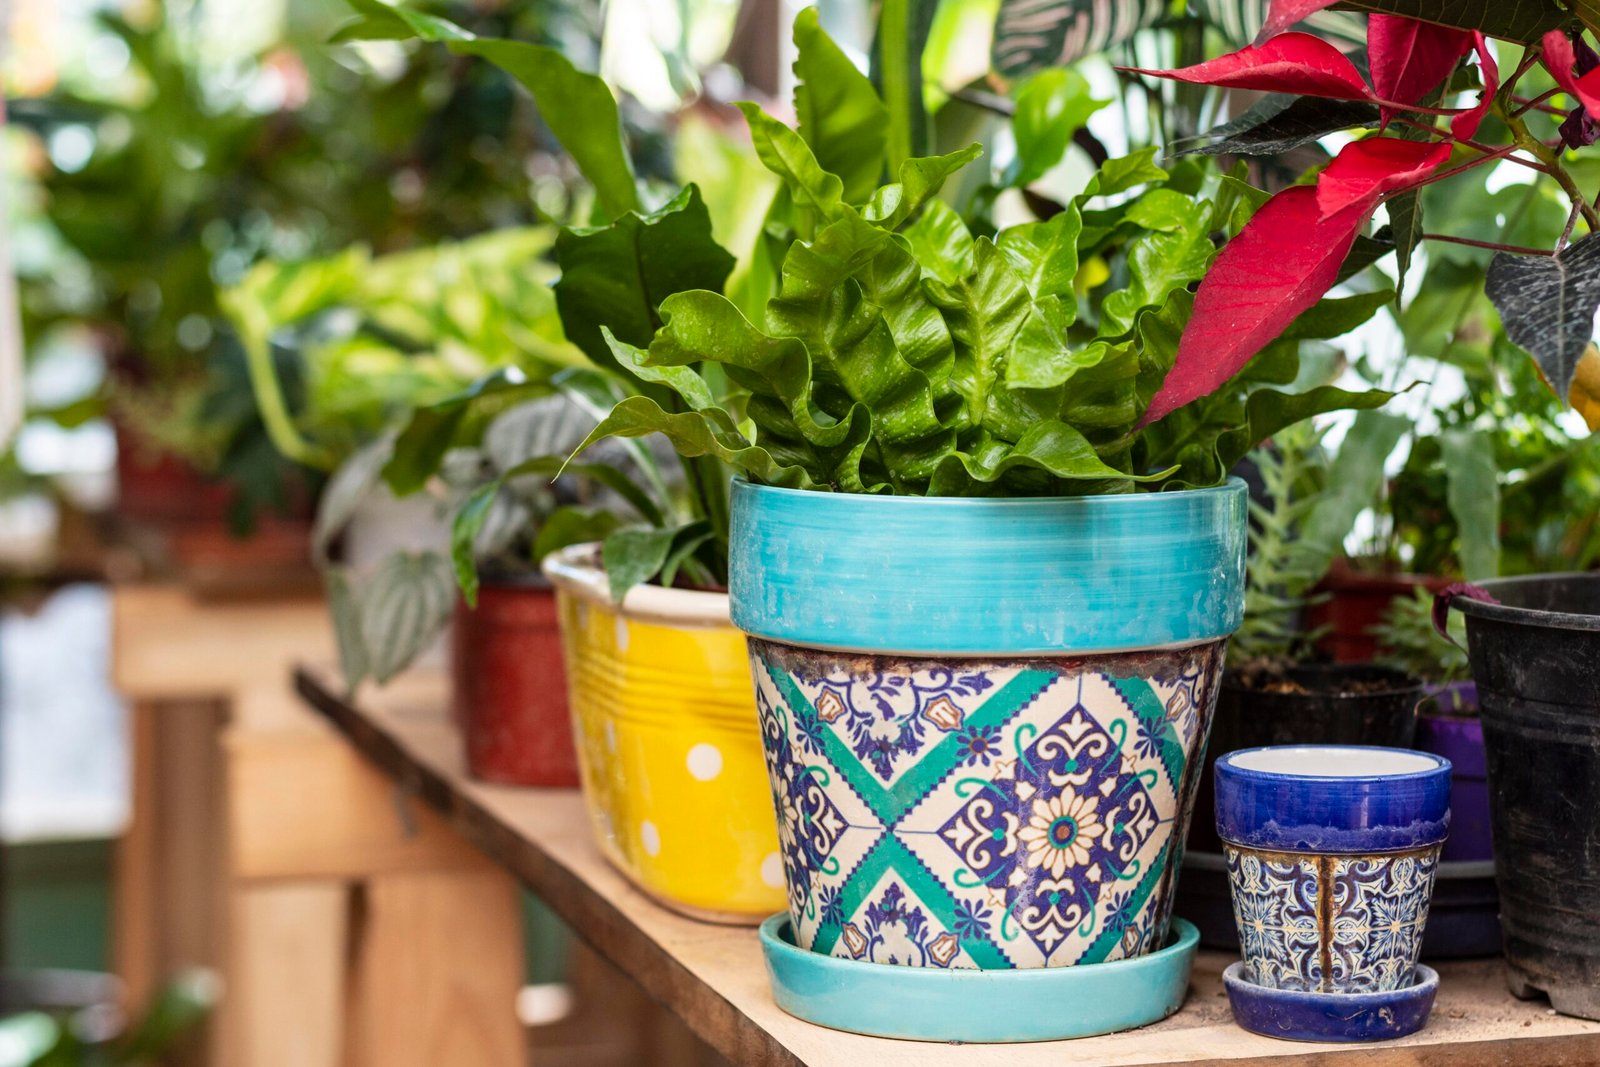 Plants in a blue pot.  